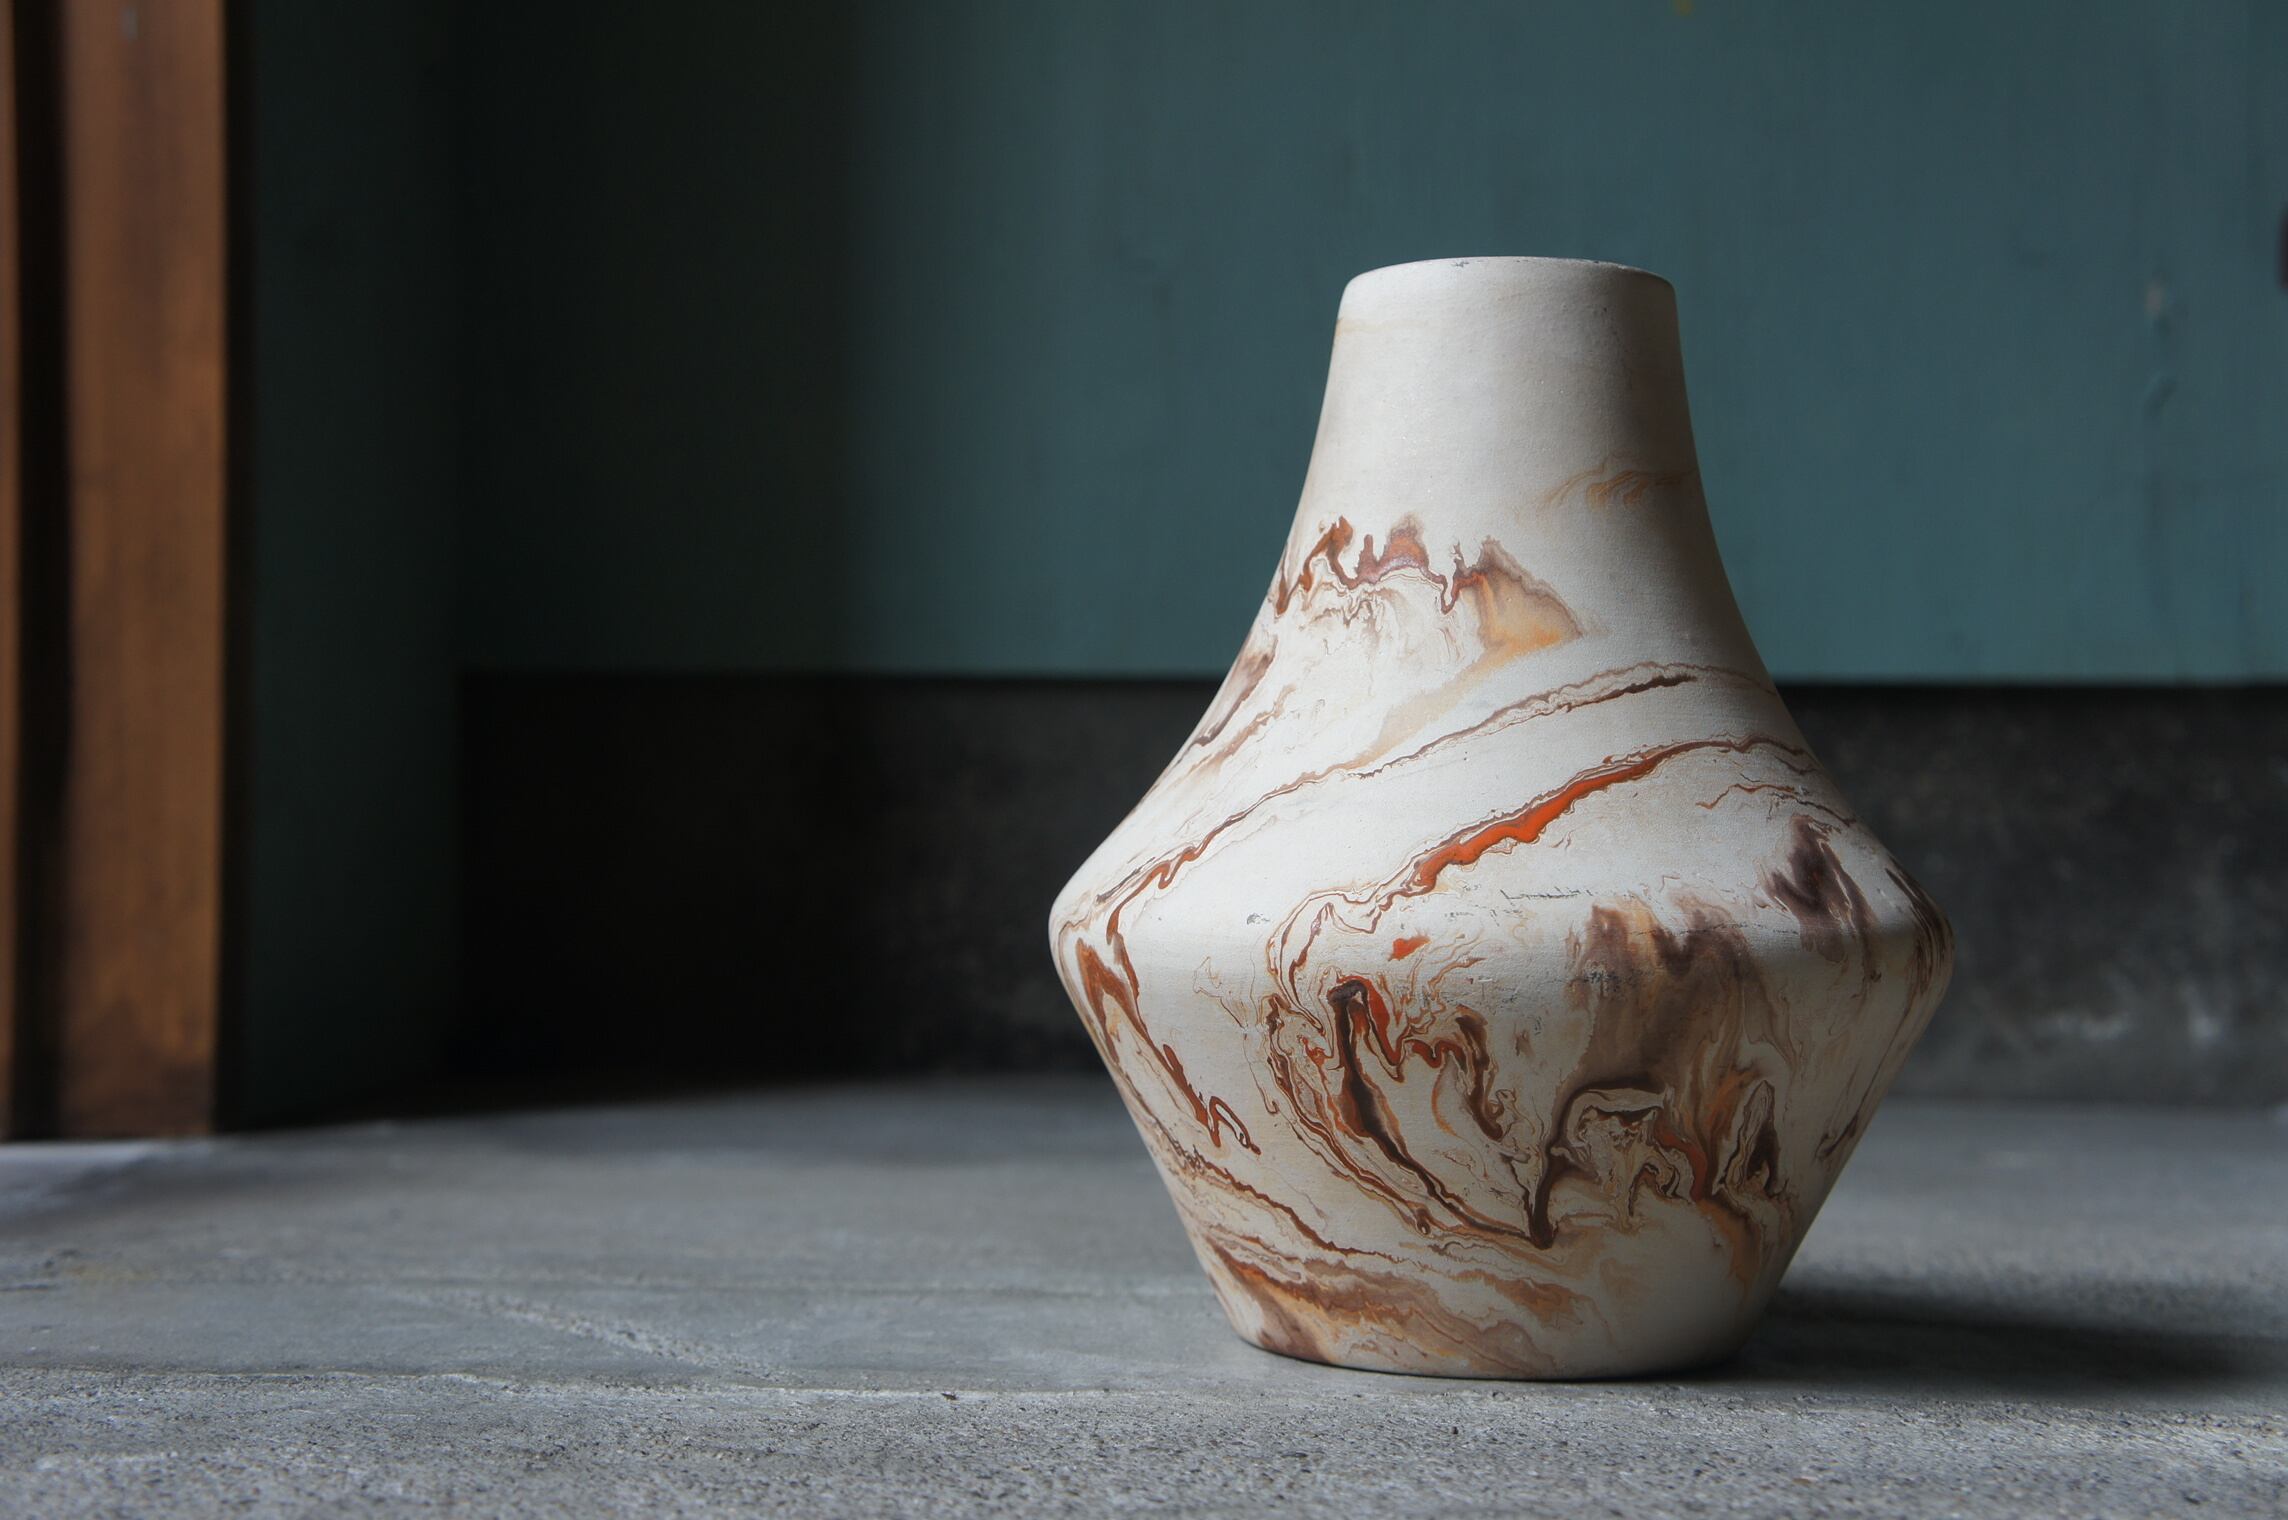 nemadji pottery vase ネマージ インディアン 花瓶 www.krzysztofbialy.com